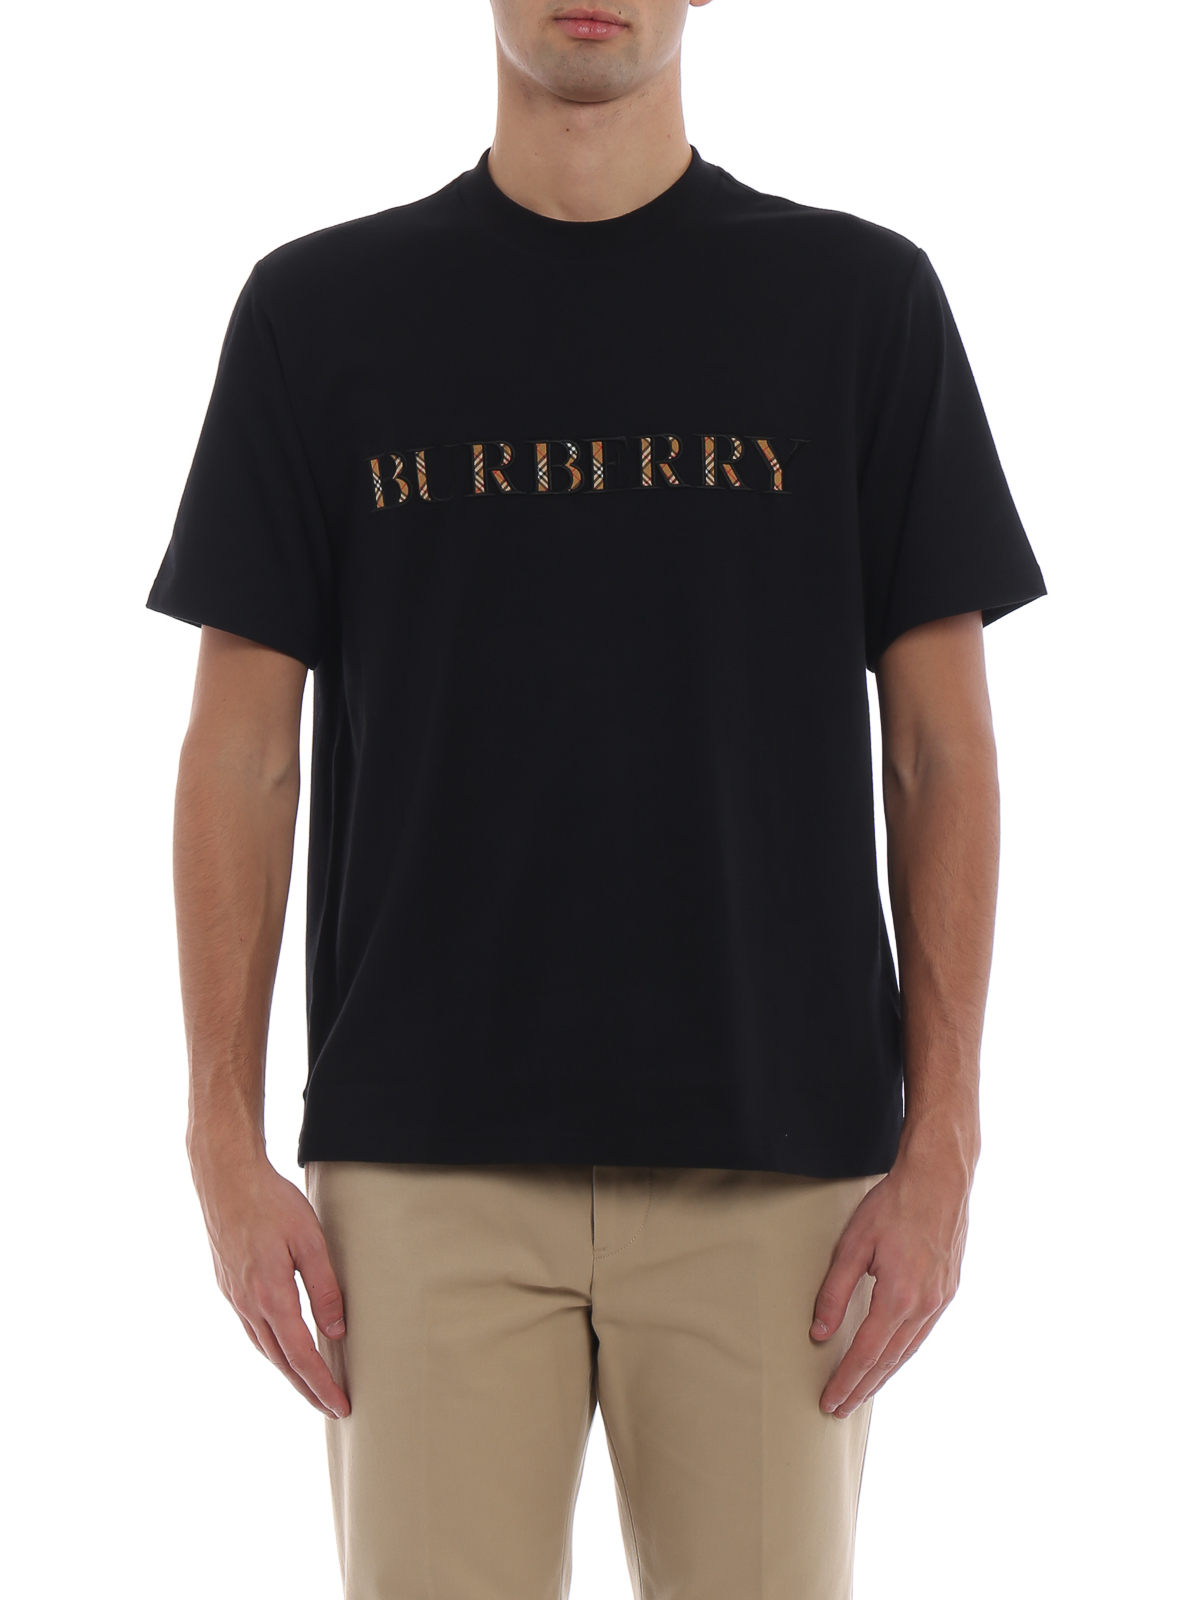 Tシャツ Burberry - Tシャツ - Sabeto - 8007819 | iKRIX shop online